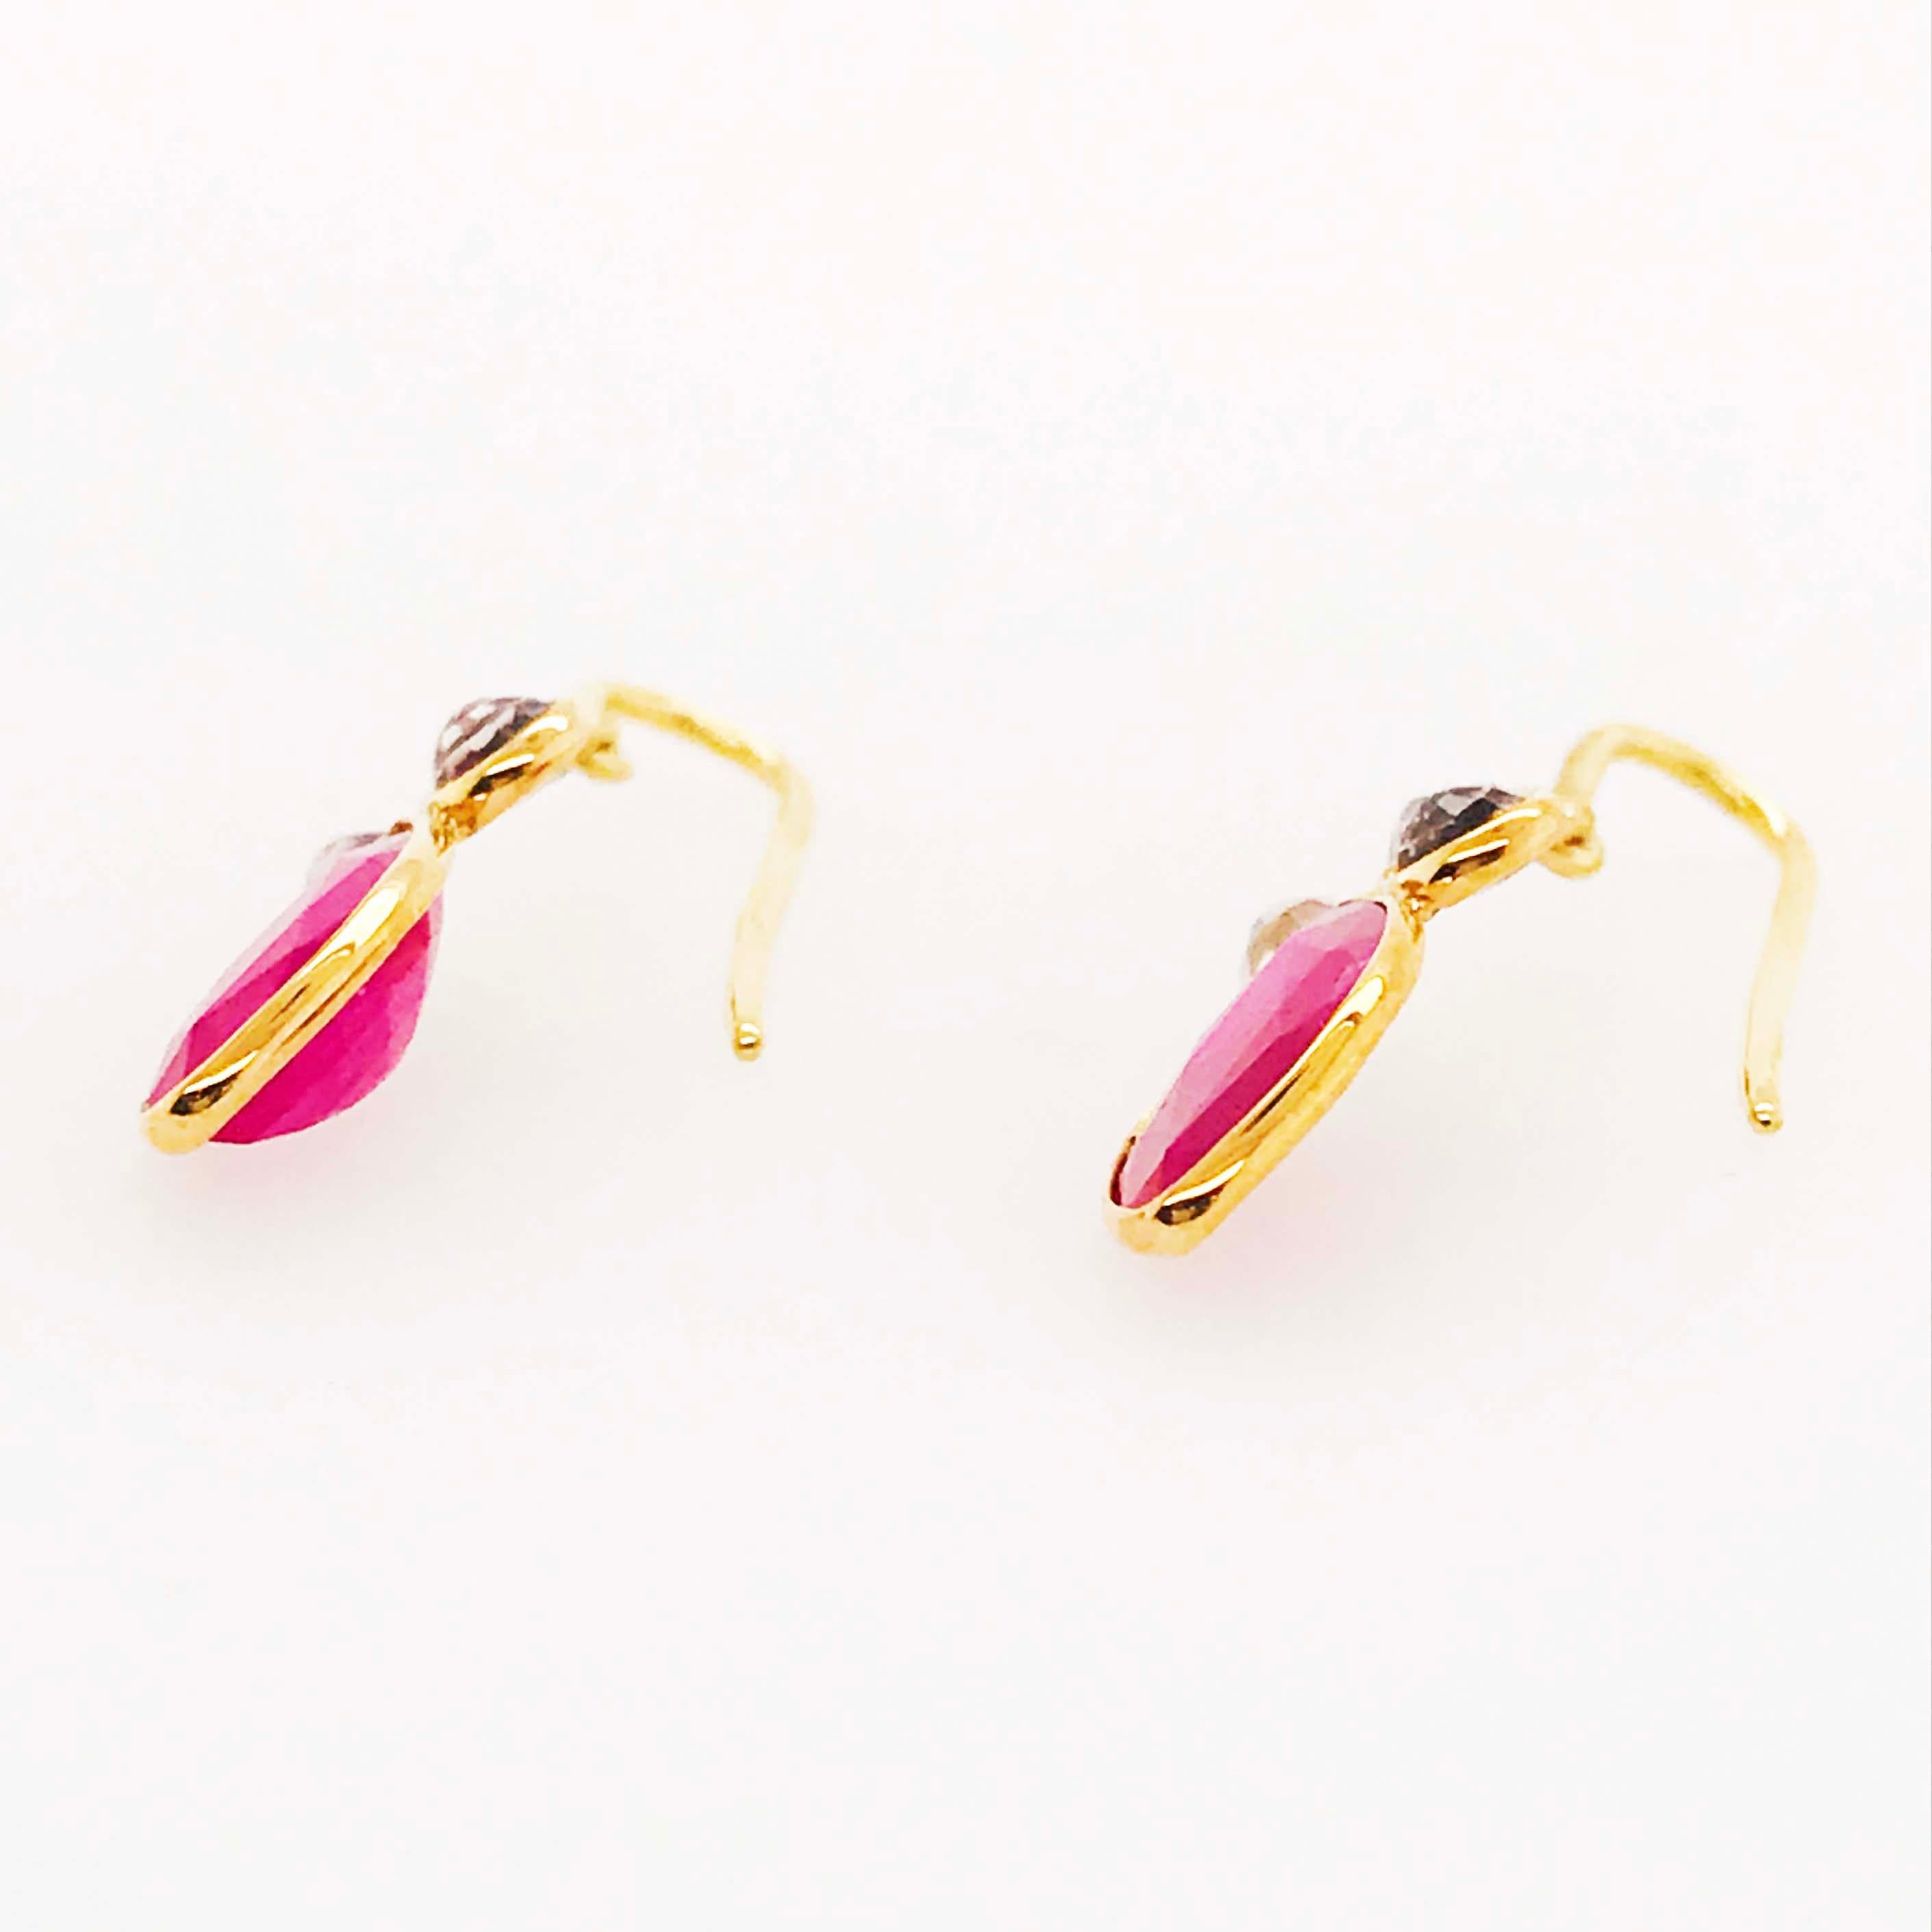 Marquise Cut Ruby and Rainbow Moonstone Earrings, 18 Karat Yellow Gold Earring Dangles